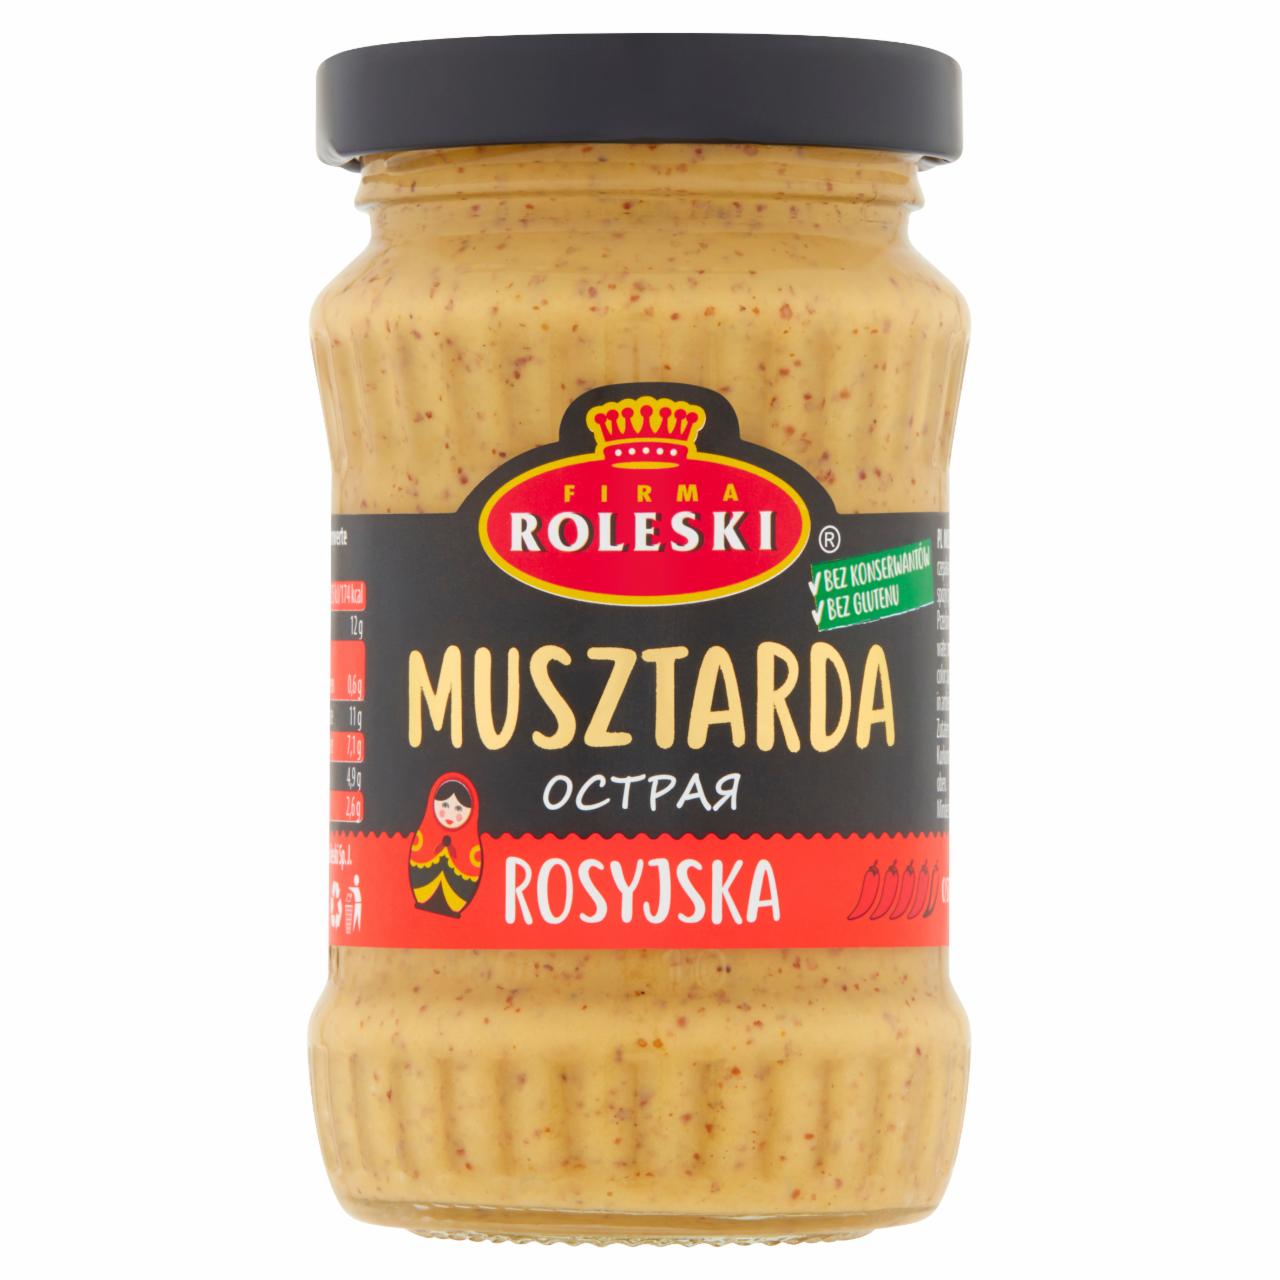 Фото - Горчица русская Russian Mustard Firma Roleski